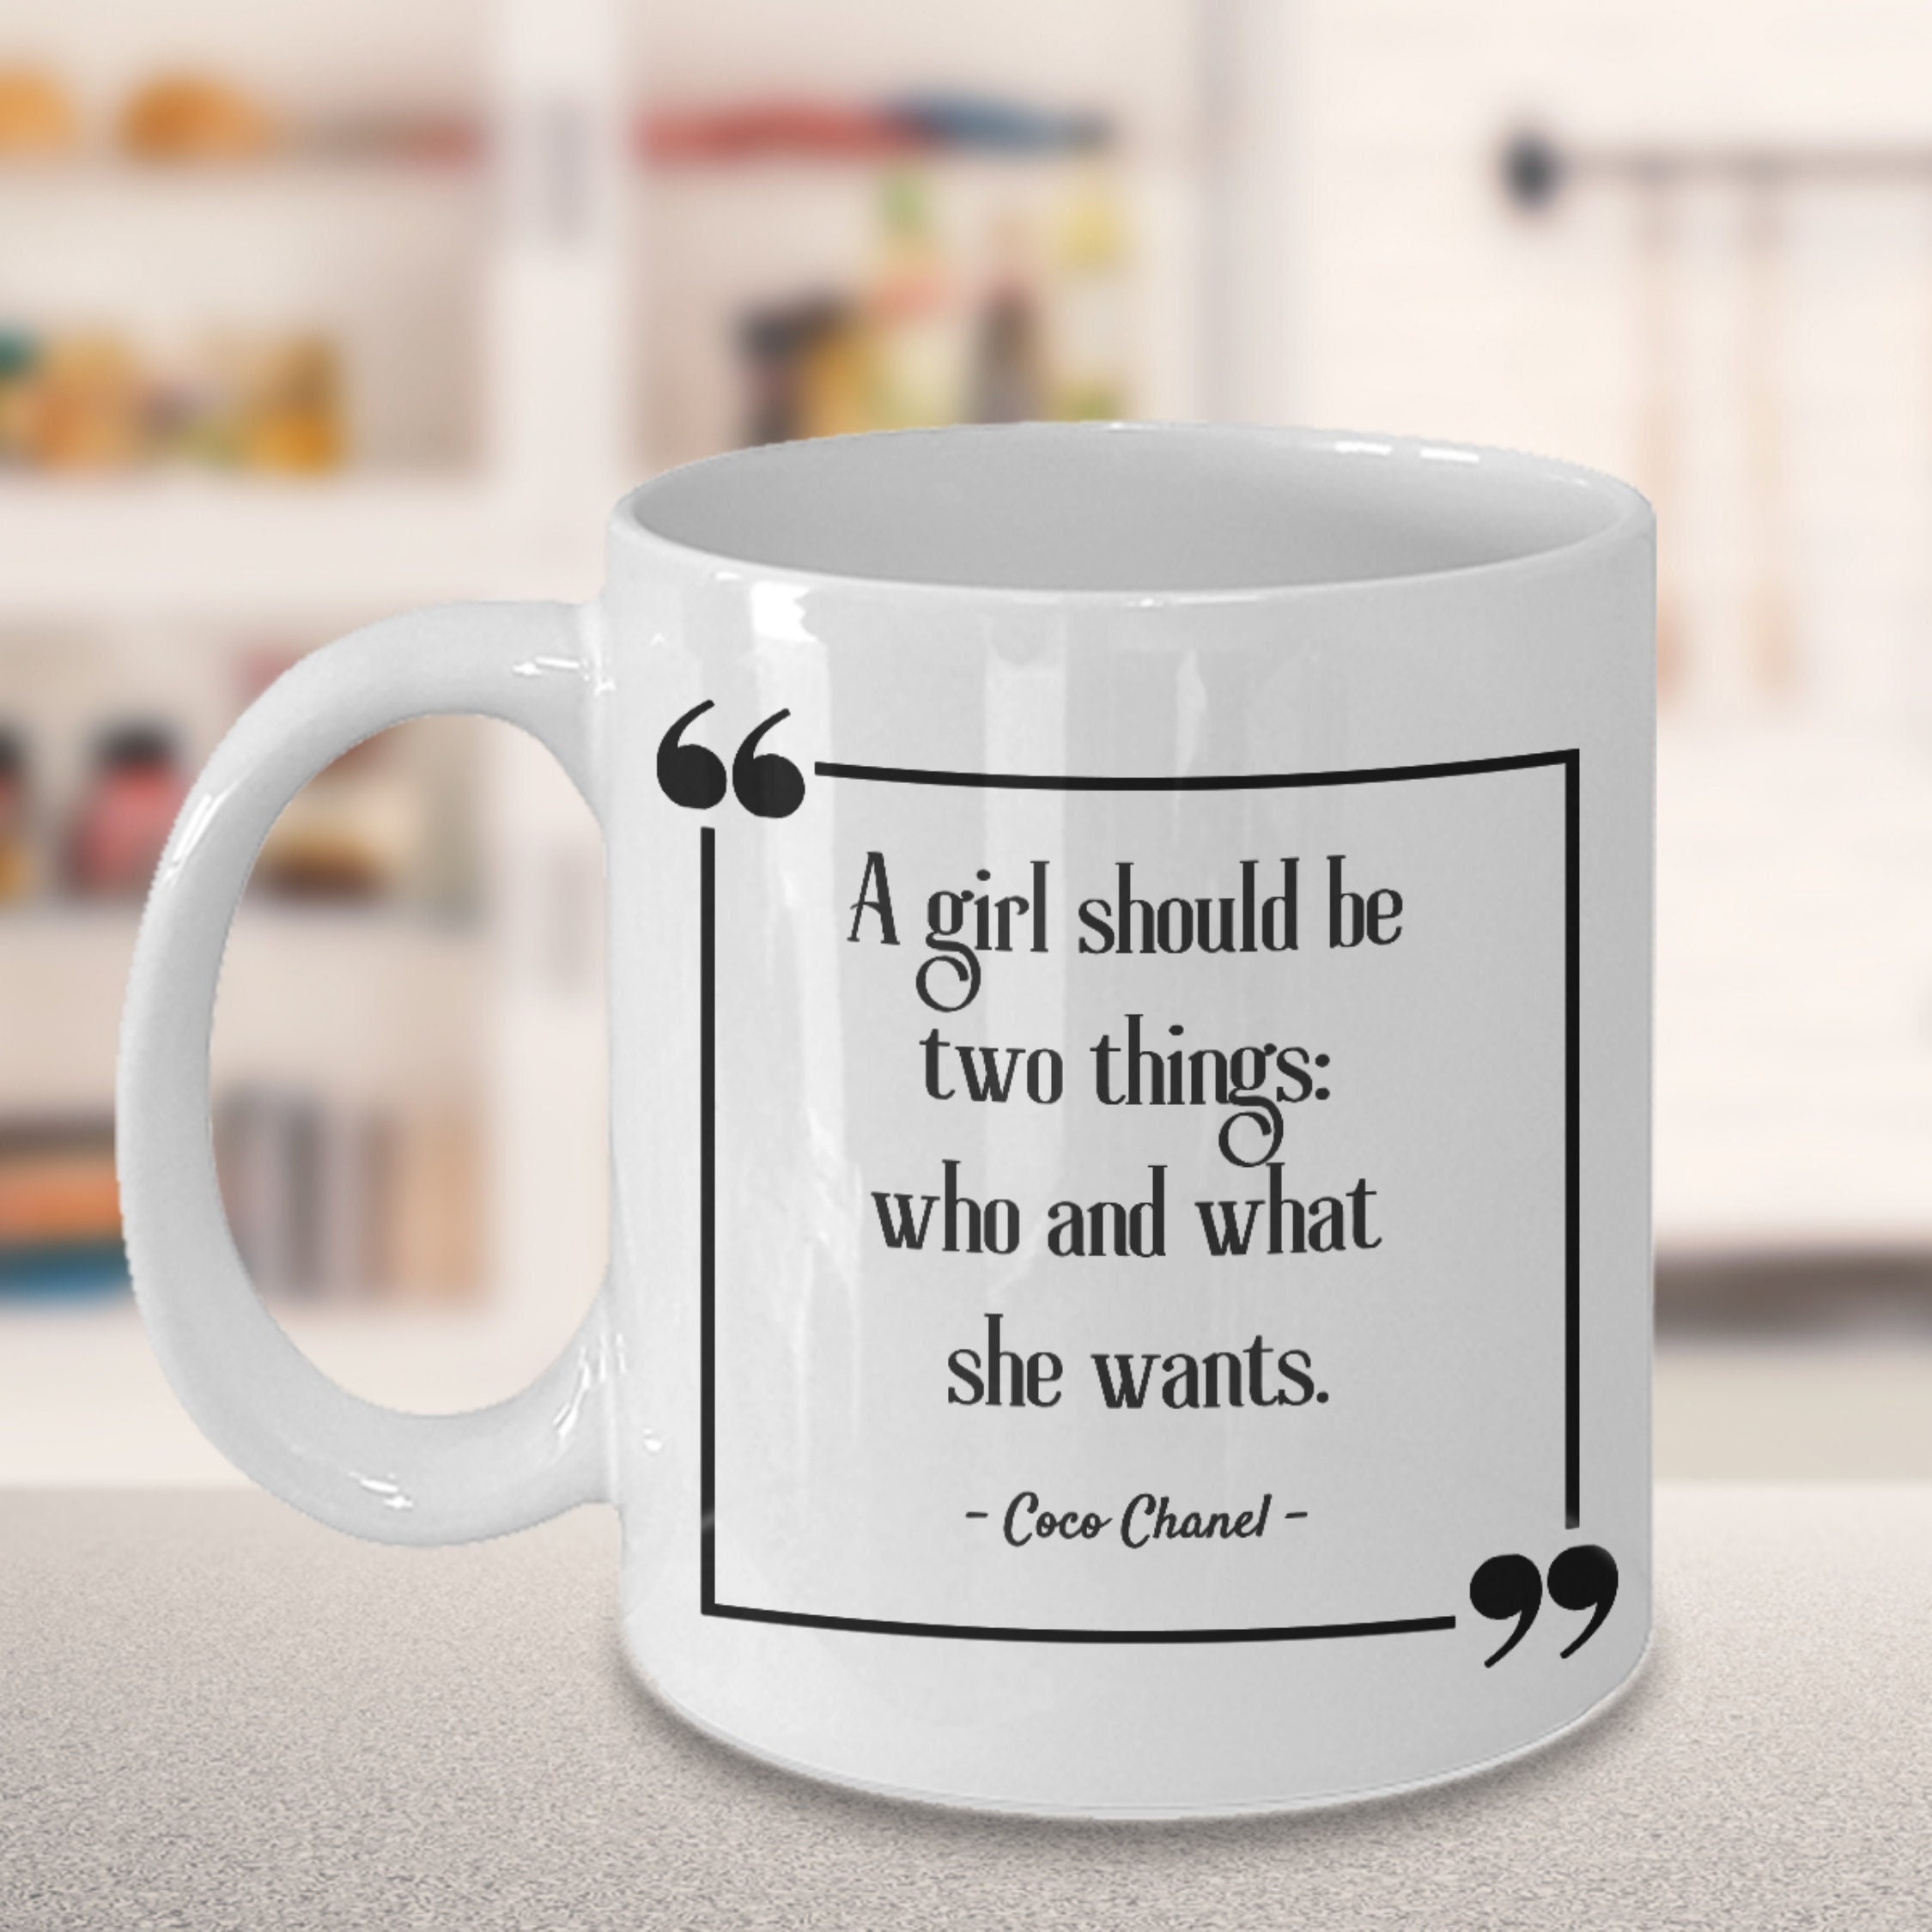 CHANELbecause a designer mug will make my coffee taste better